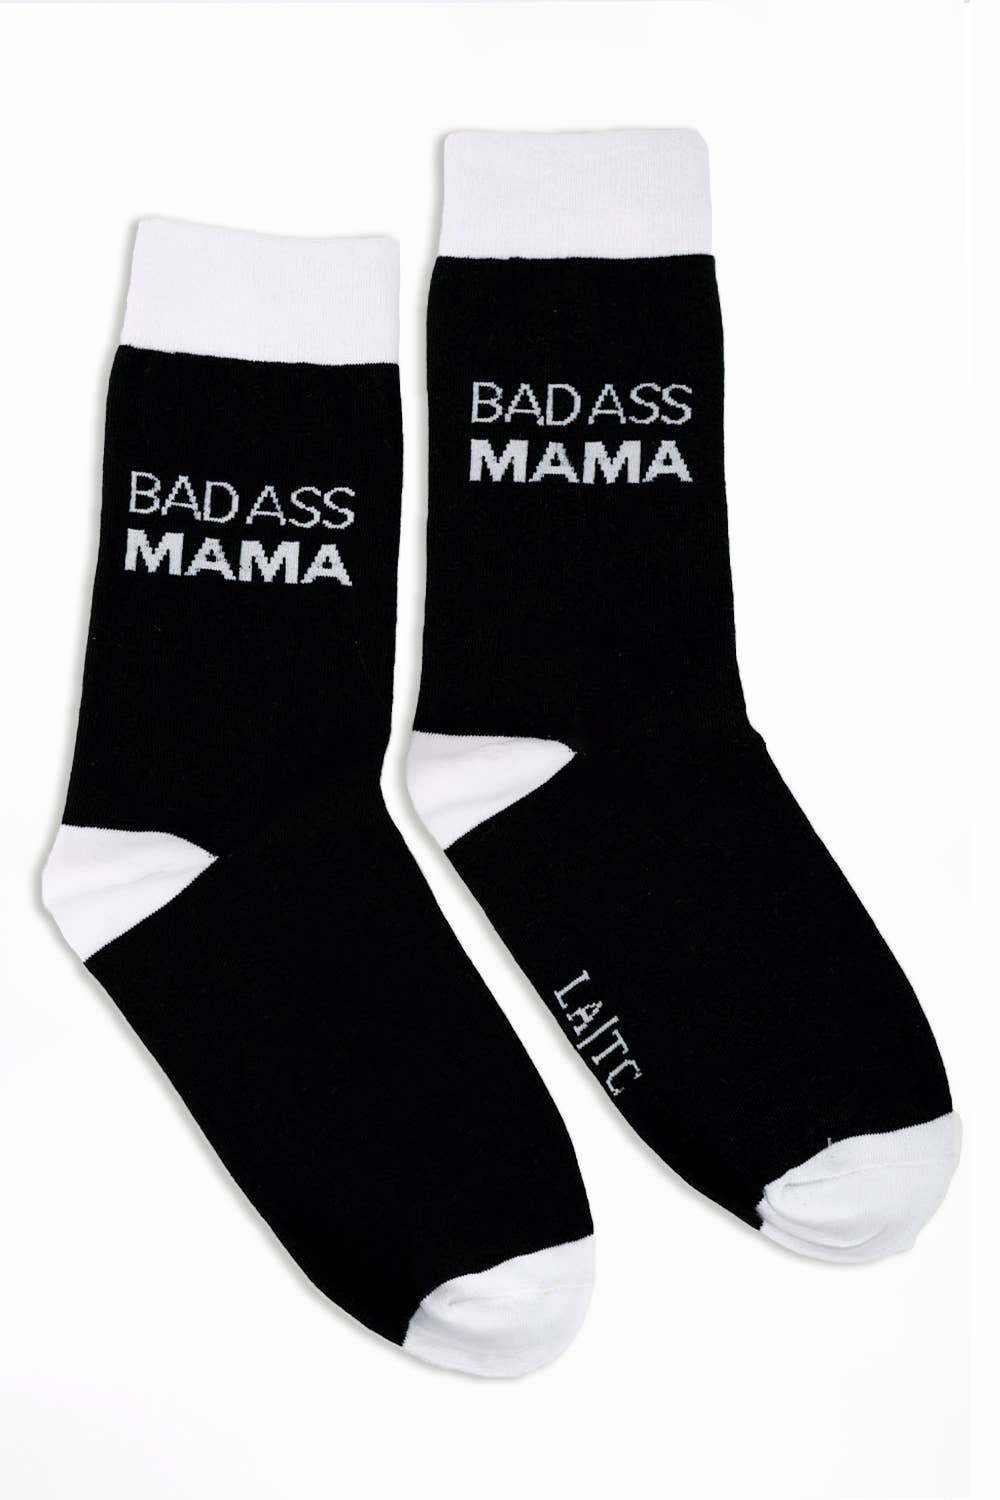 LA Trading Co Bad Ass Mama Socks